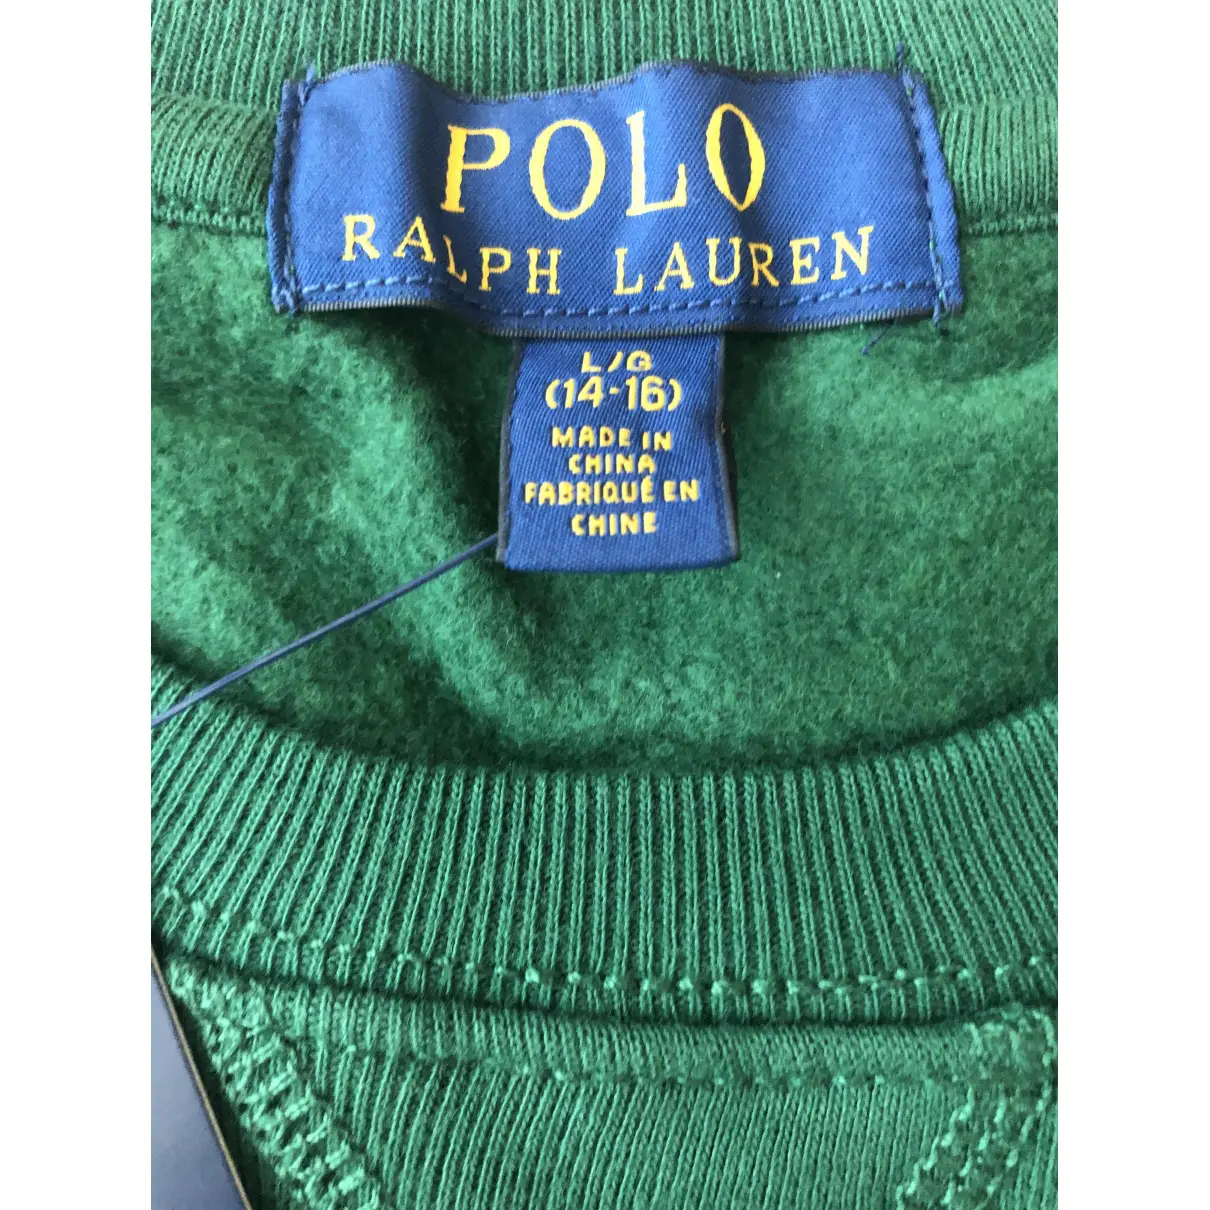 Buy Polo Ralph Lauren Green Cotton Knitwear online